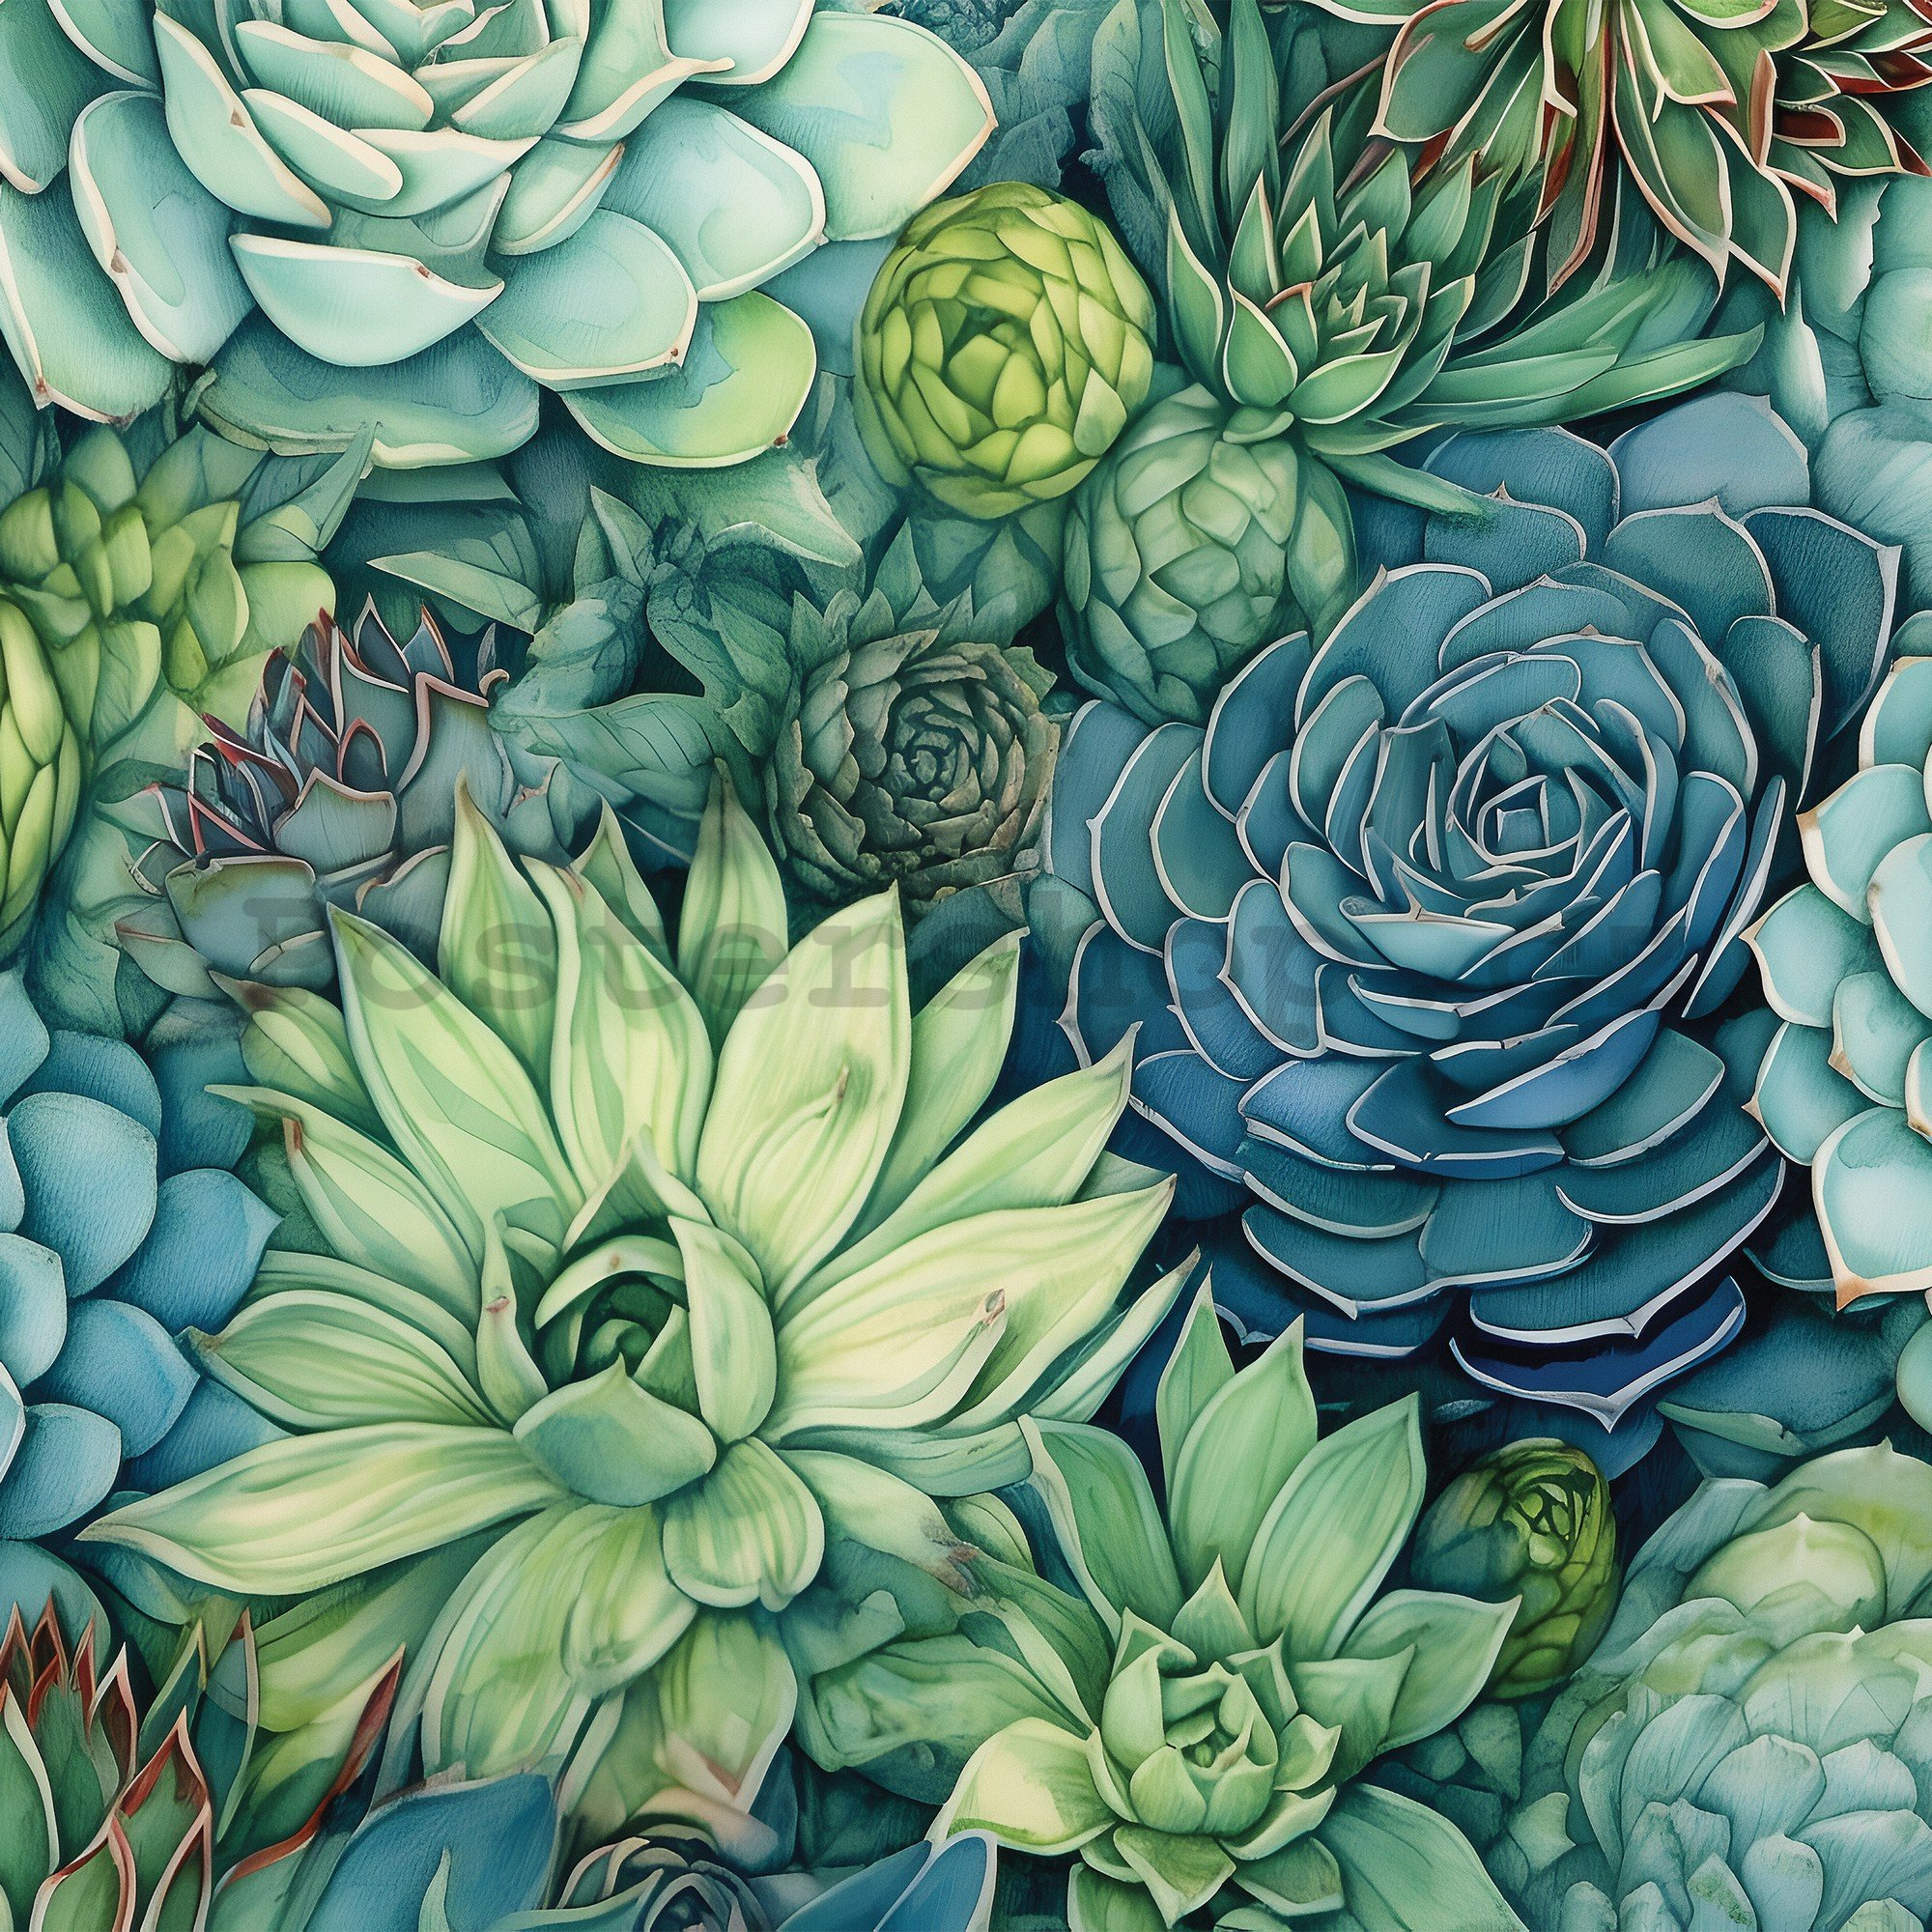 Fototapety vliesové: Succulents - 368x254 cm